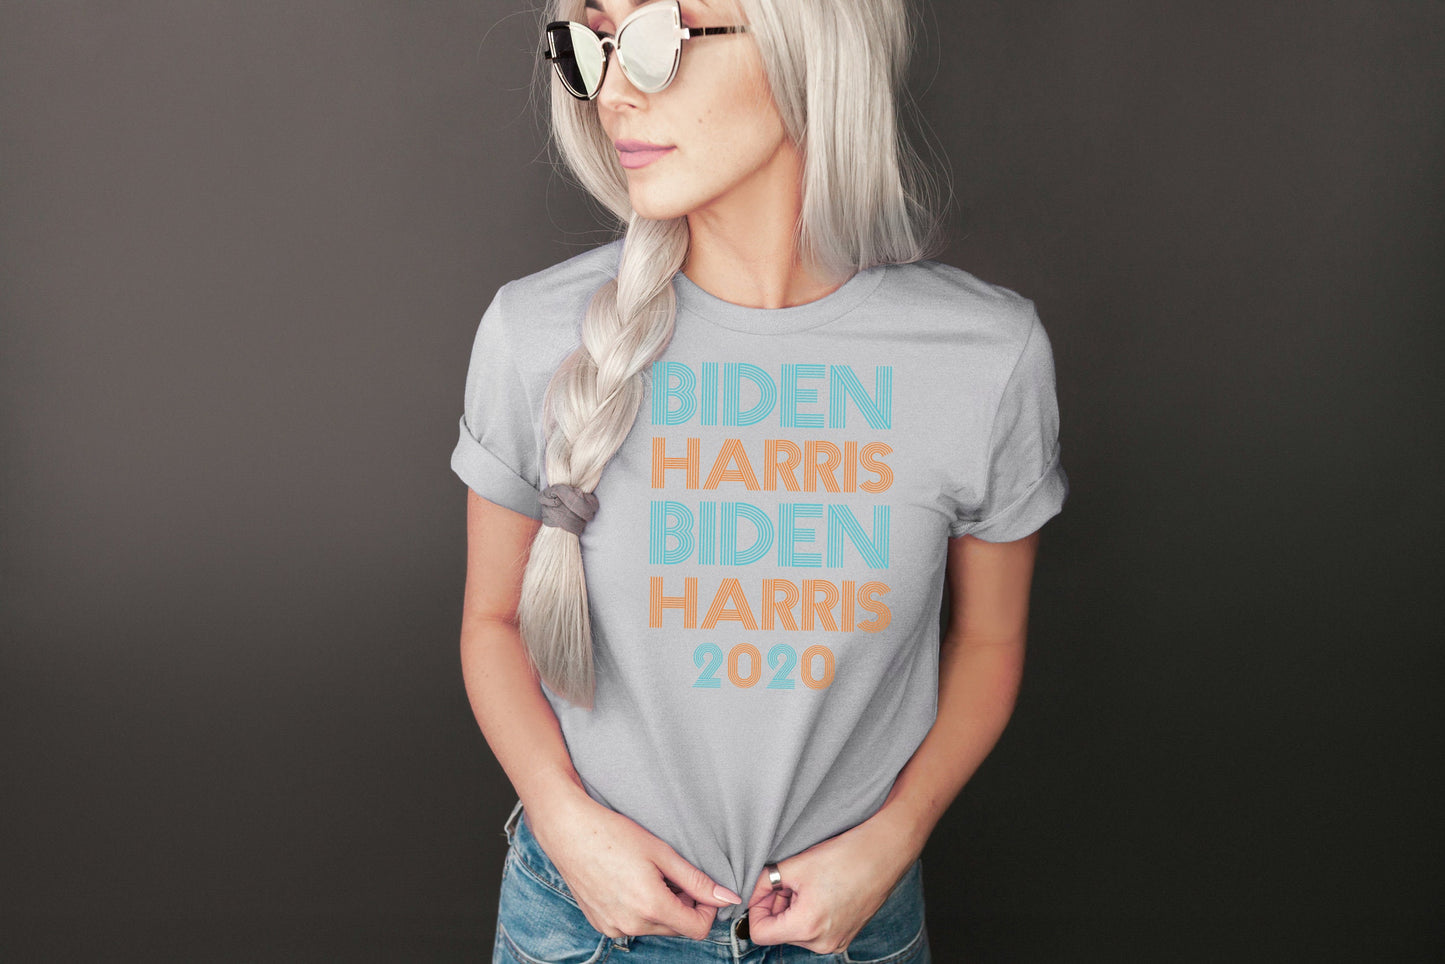 Retro Joe Biden Kamala Harris 2020 Shirt - Vintage Look - Vintage Joe Biden Kamala Harris 2020 Shirt - Retro Democrat Shirt - Liberal